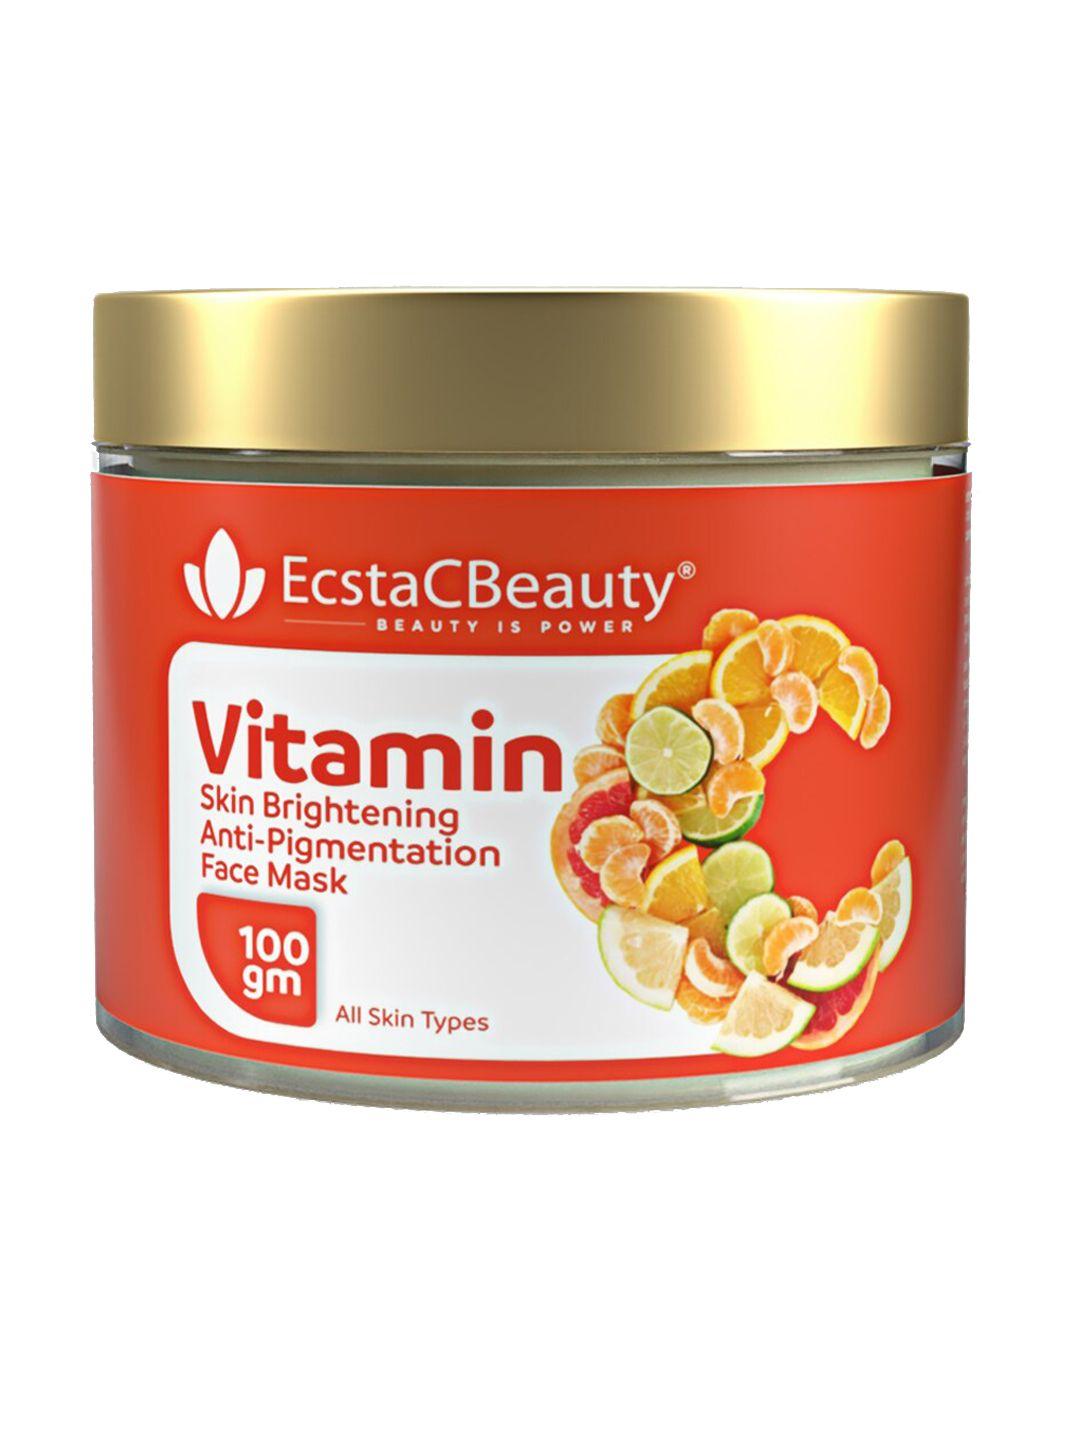 ecstacbeauty vitamin c skin brightening anti-pigmentation face mask - 100ml